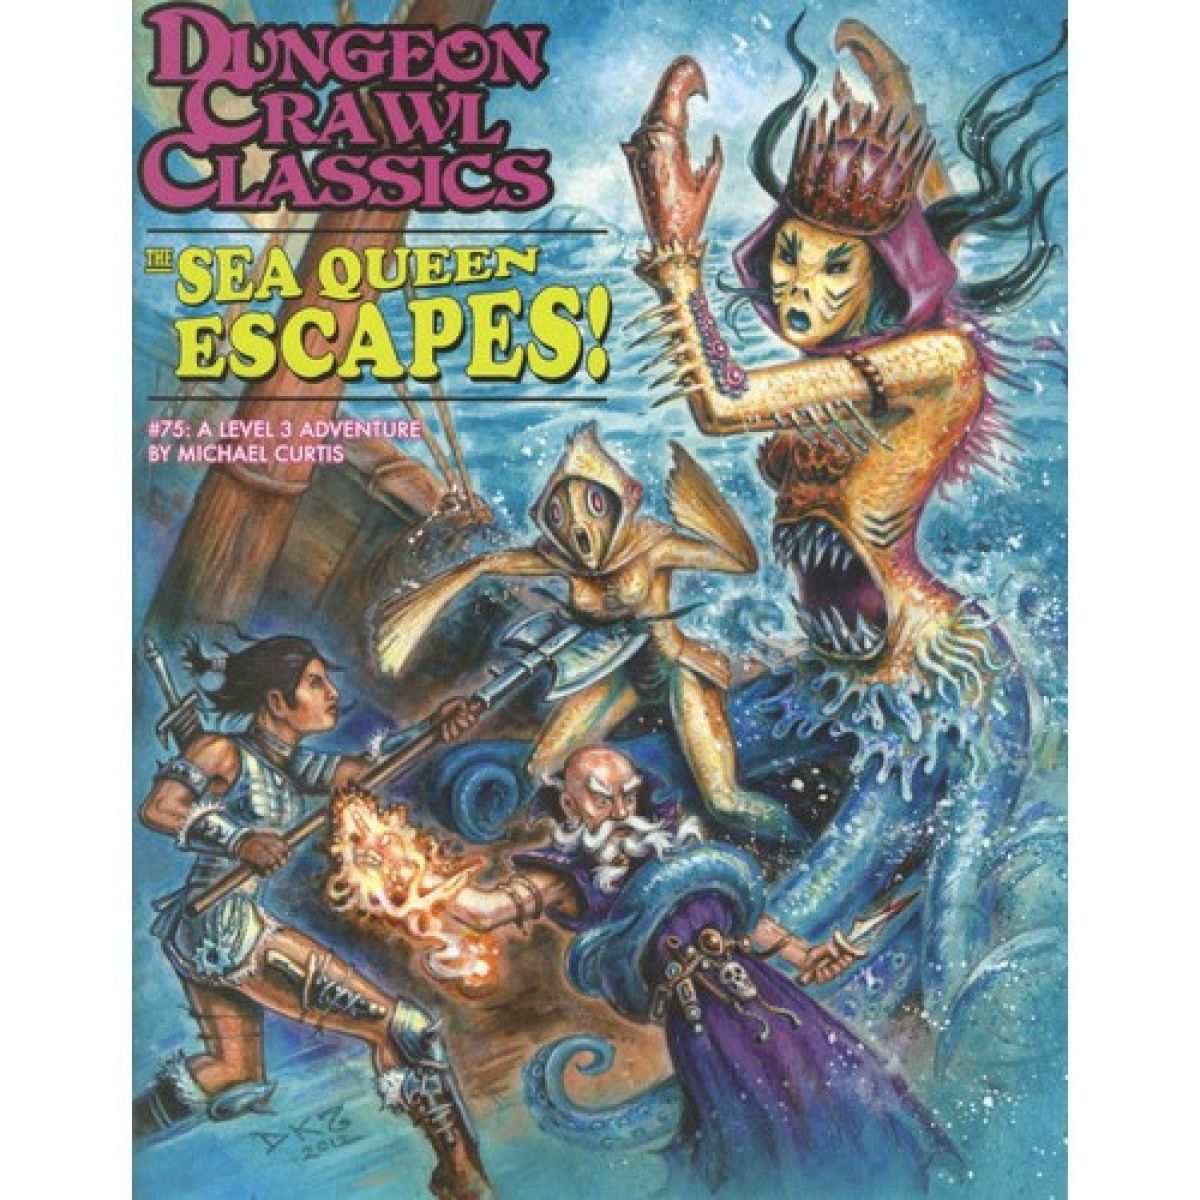 Dungeon Crawl Classics #75 - The Sea Queen Escapes